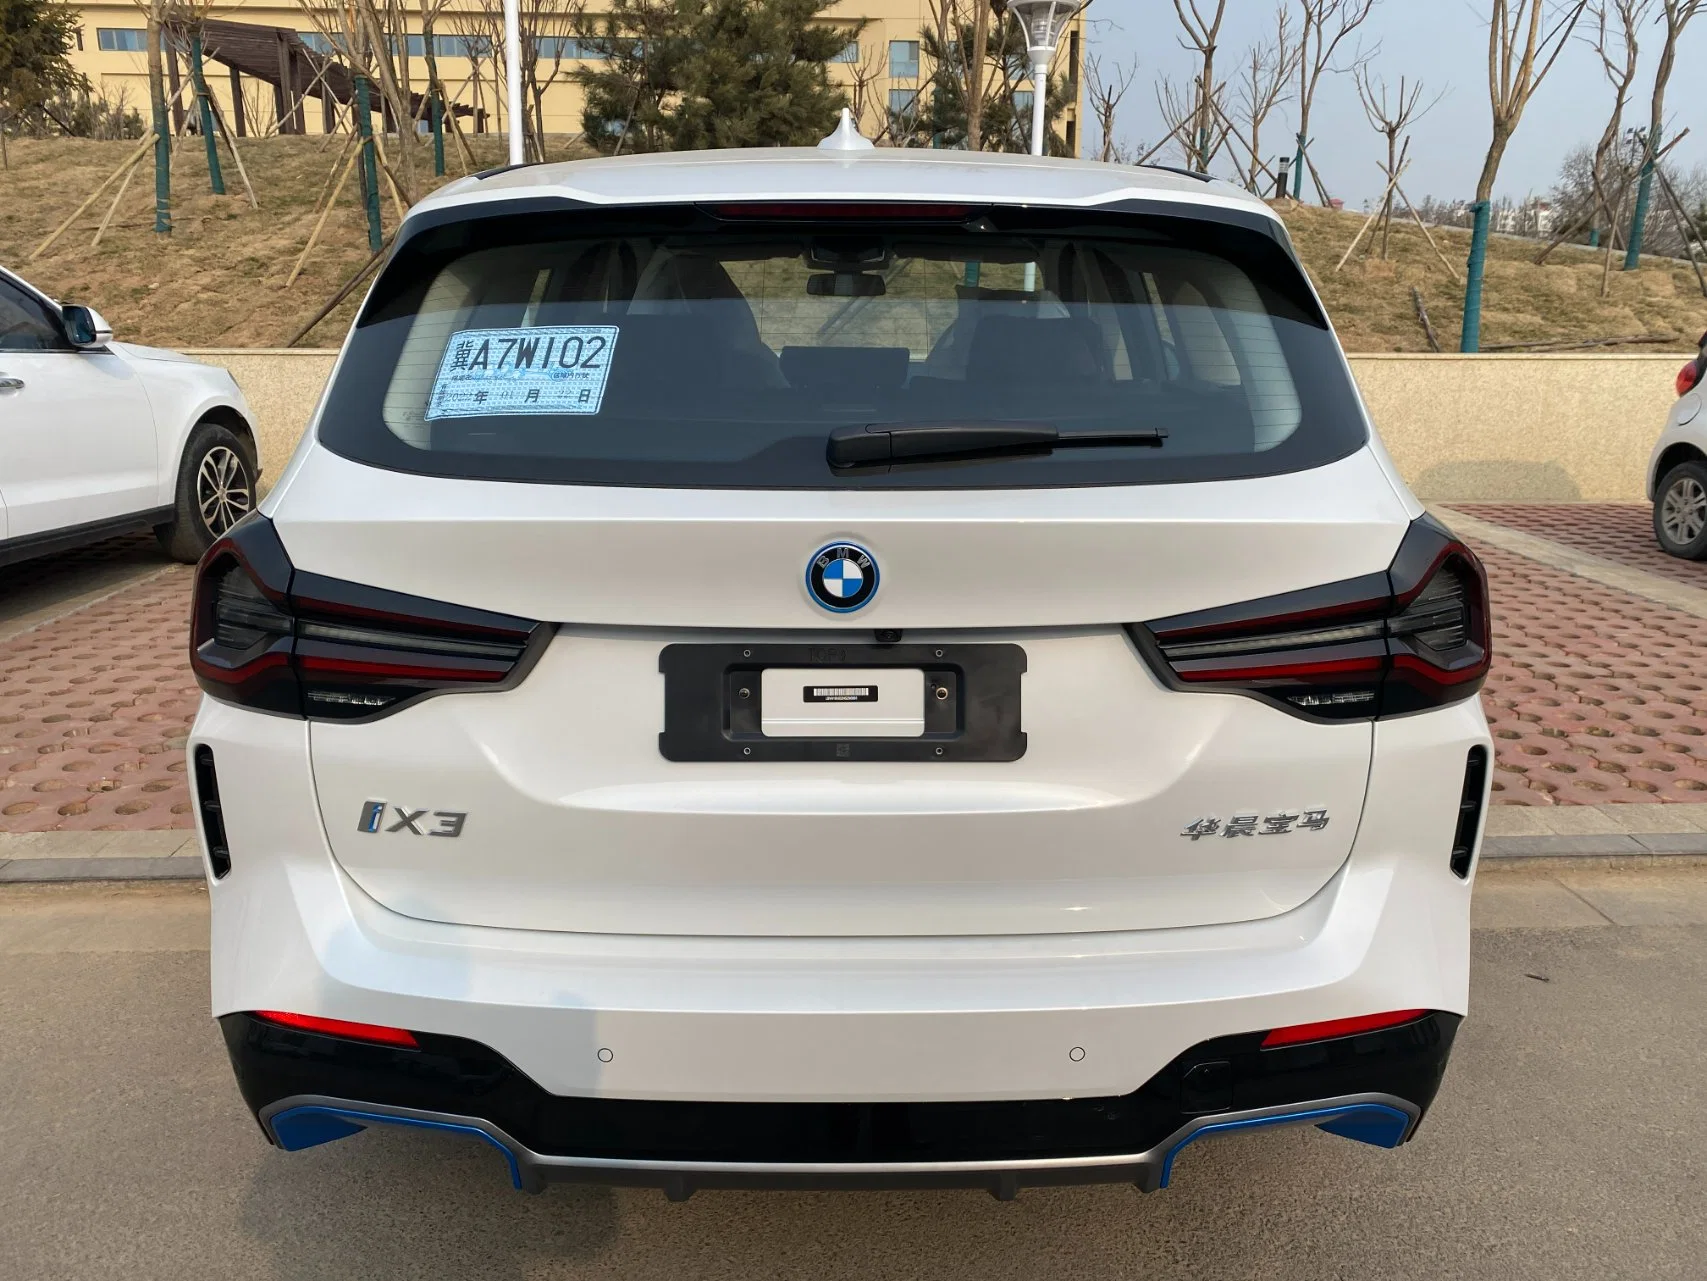 Utilizado modelo 2022 BMW IX3 Electric Auto NEDC Range 490 Km Leading Edition